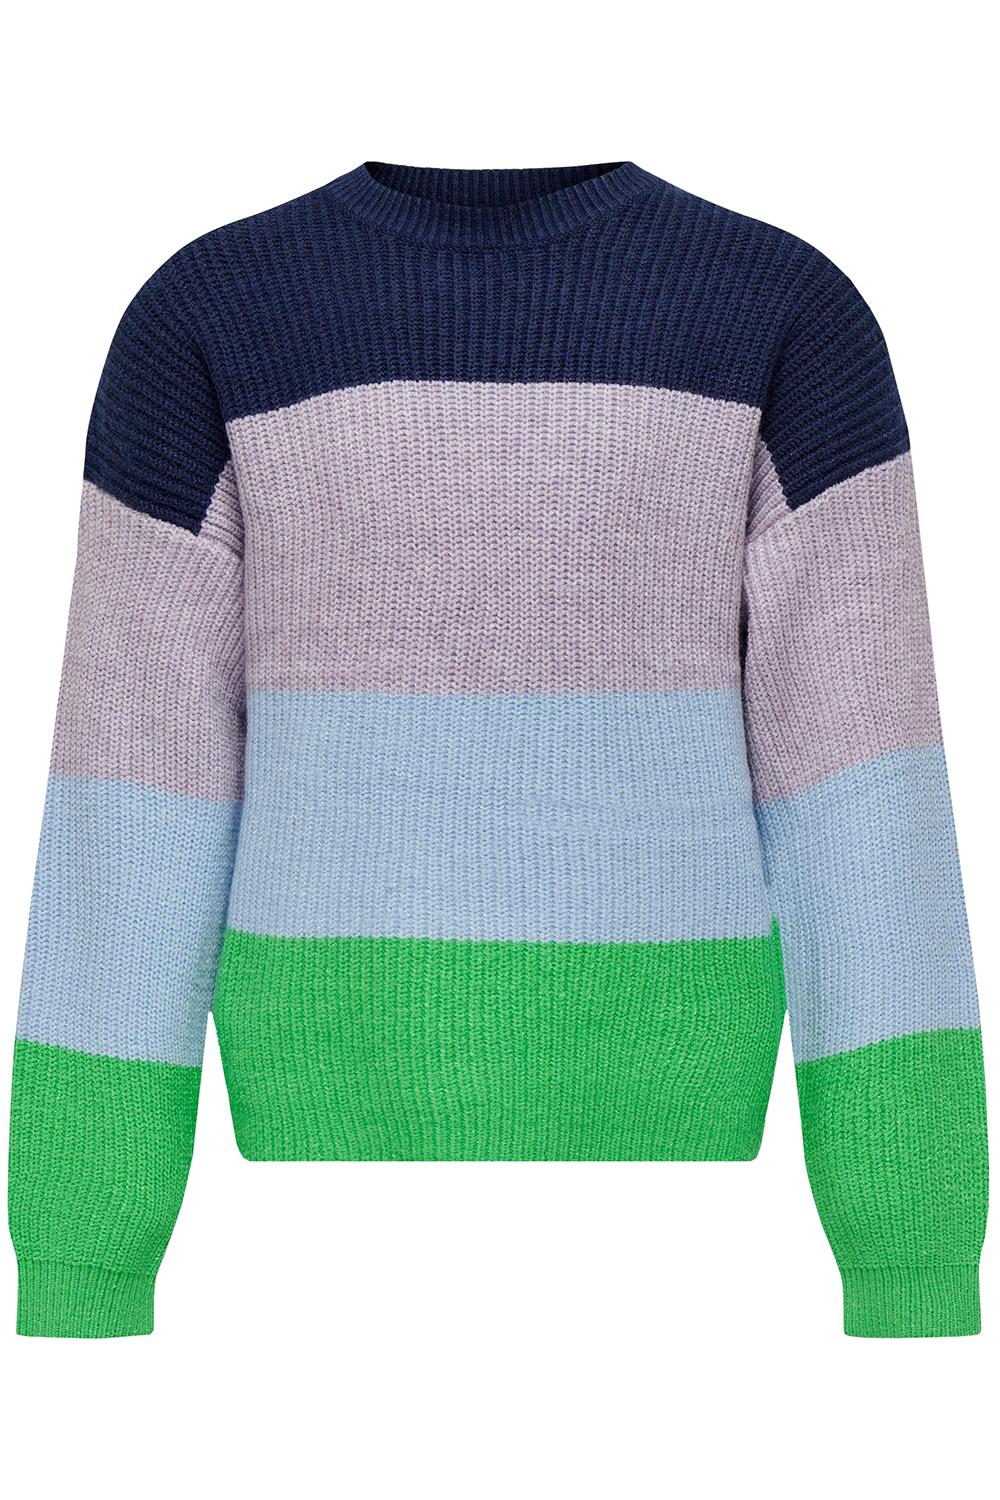 kogsandy l/s stripe pullover knt no 15207169 kids only trui island green